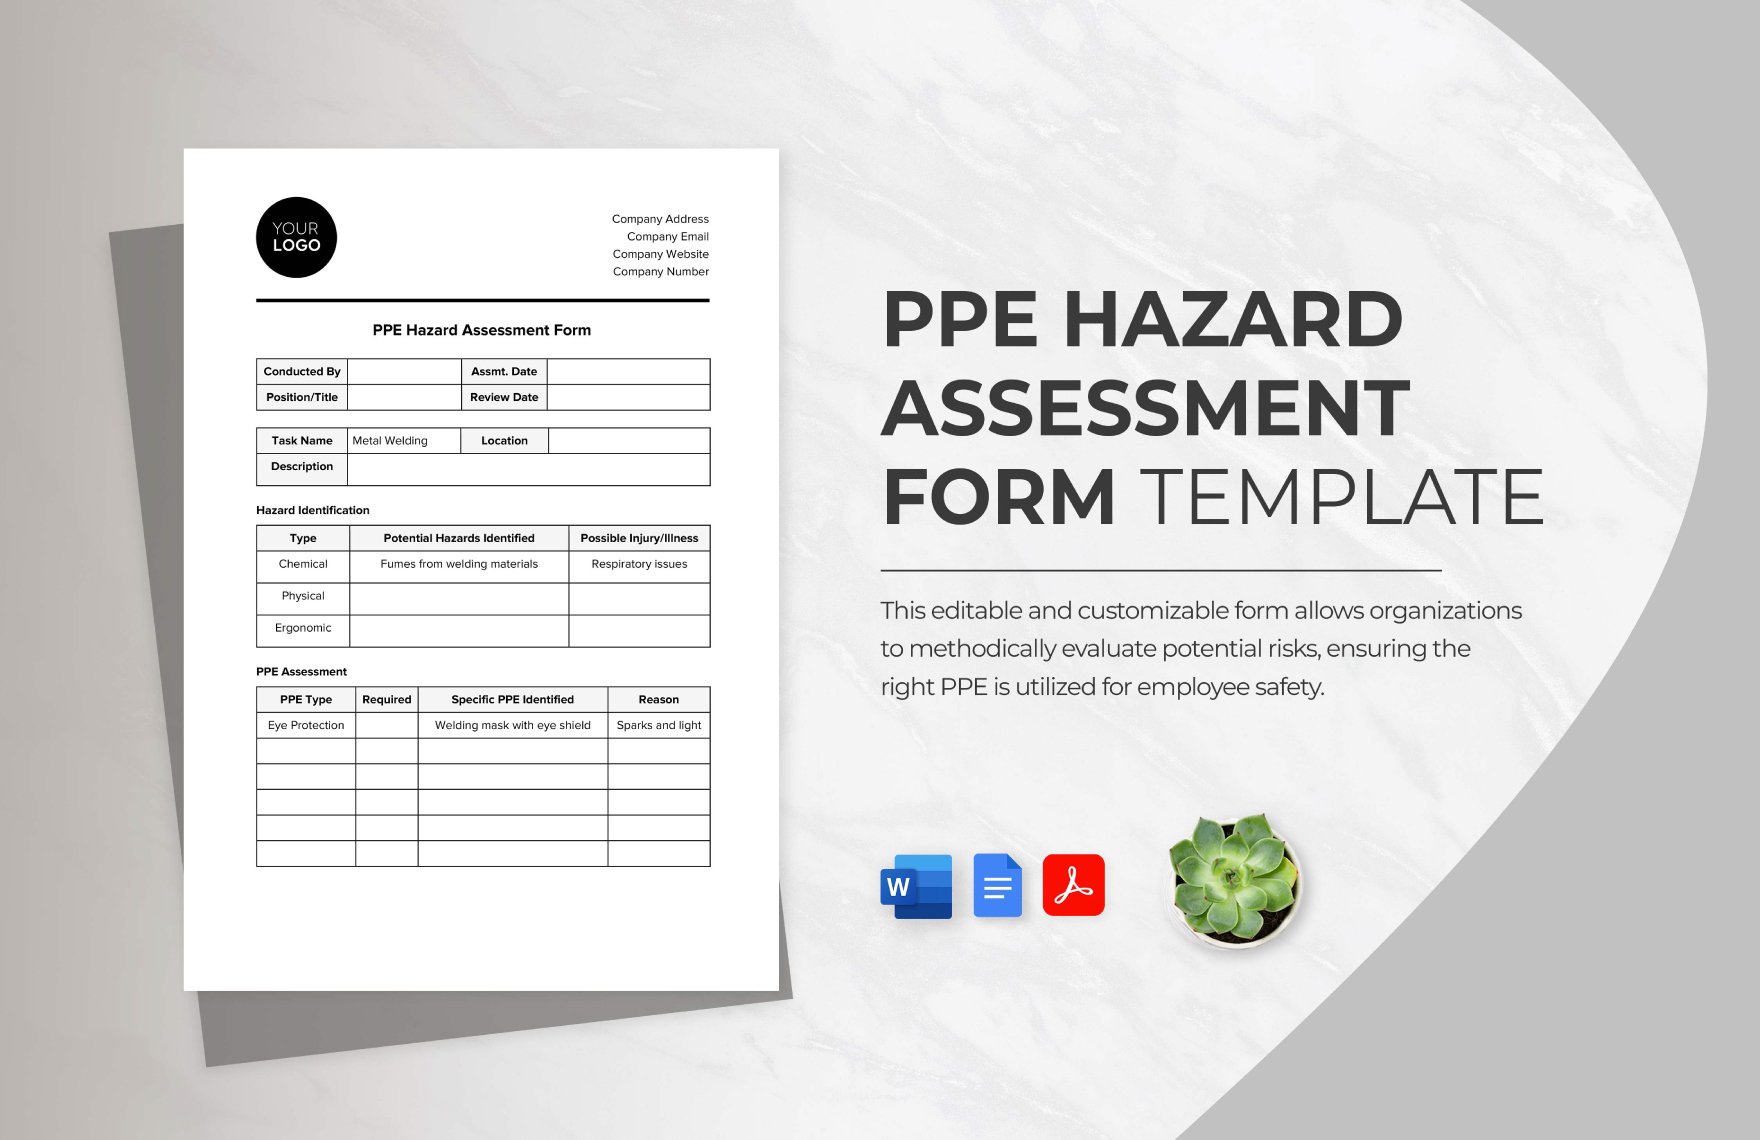 PPE Hazard Assessment Form Template